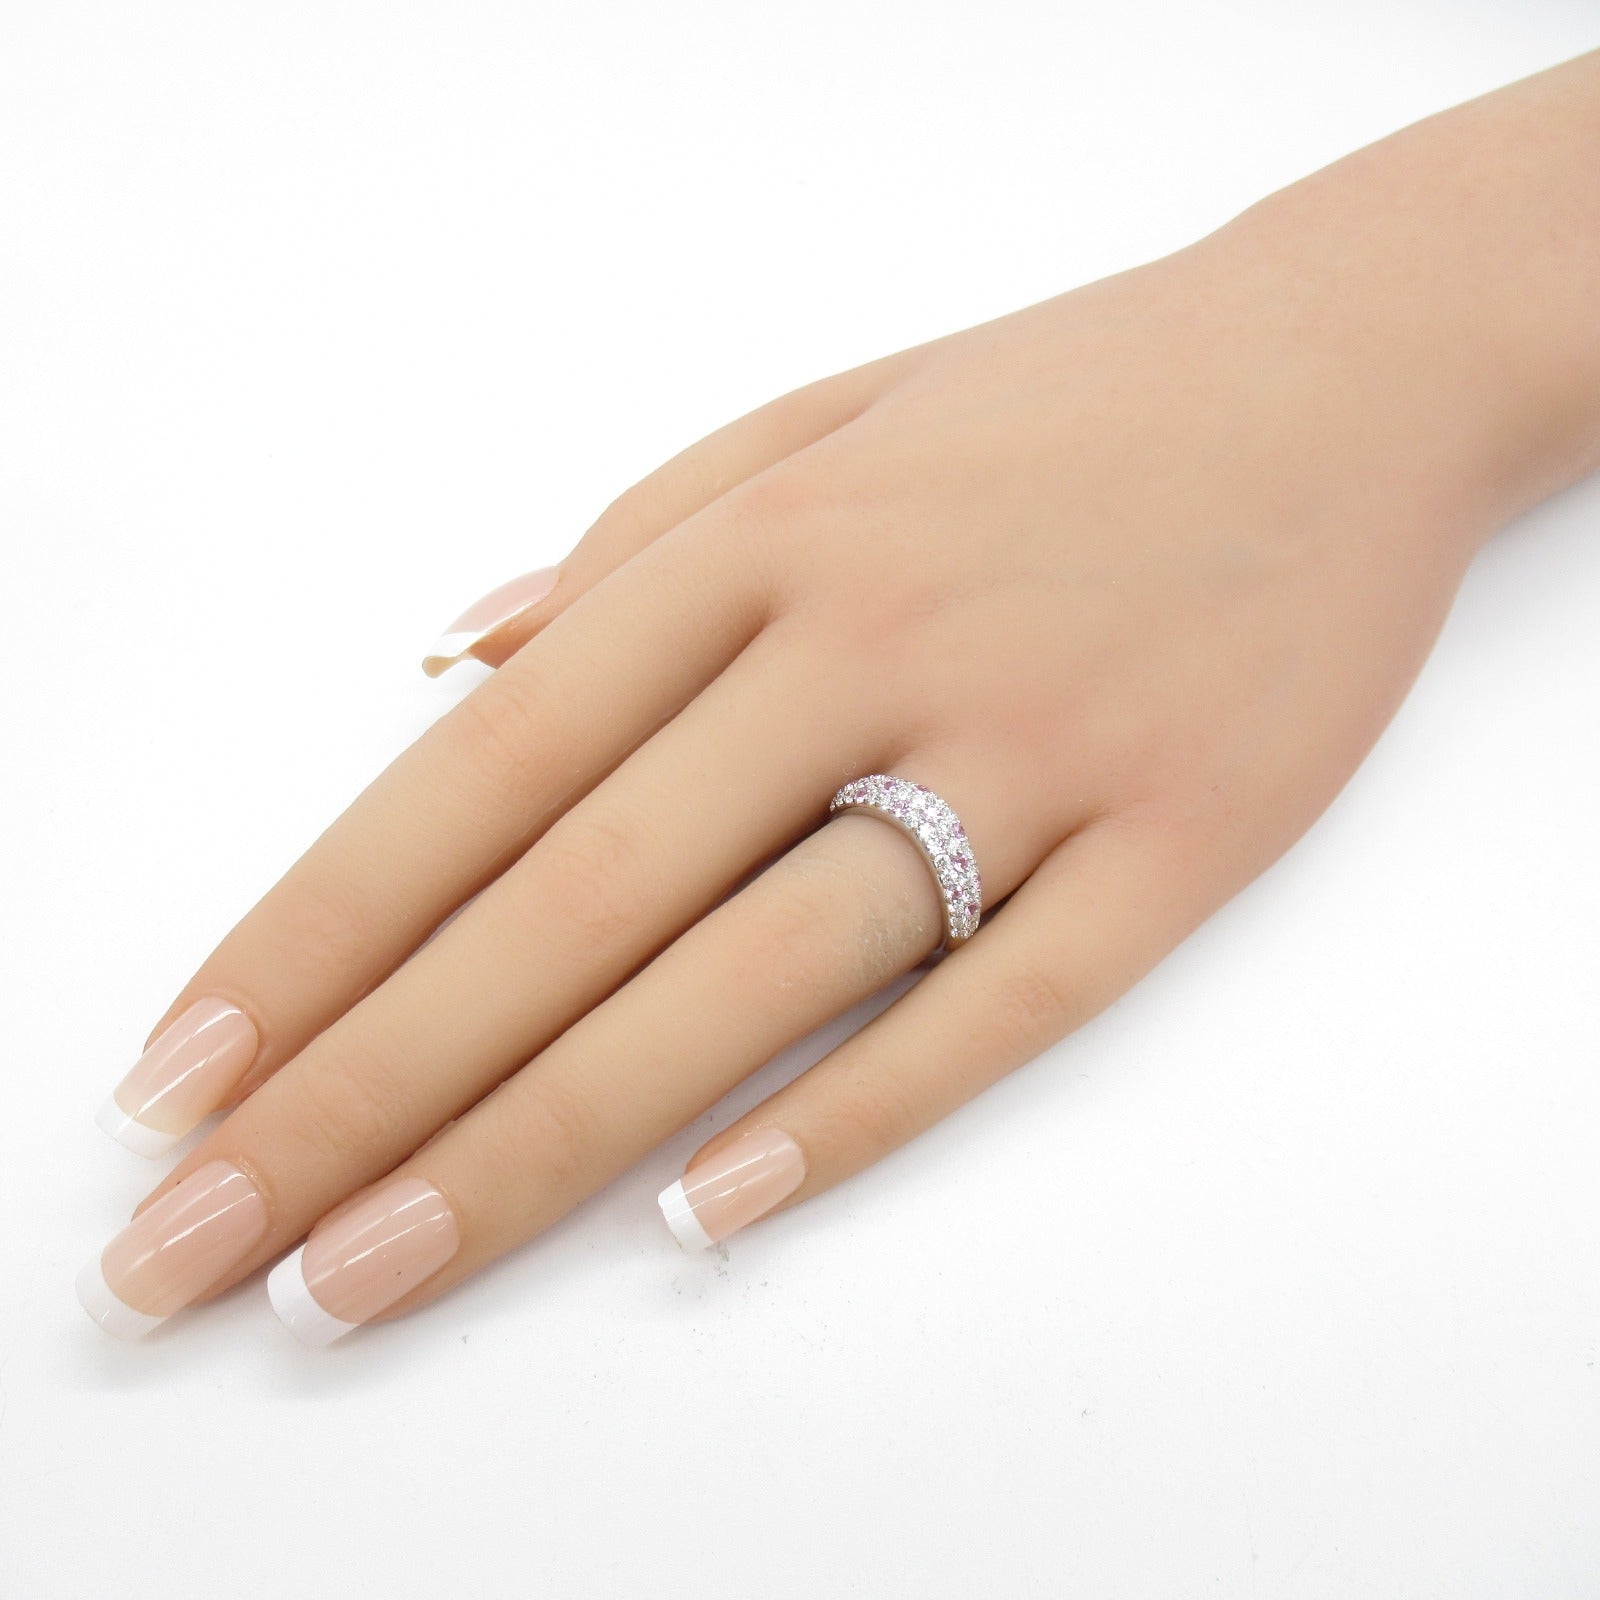 Jewelry Jewelry Diamond Ring Ring Ring Ring Jewelry K18WG (White G) Diamond  Pink / Clear Diamond 4.2g